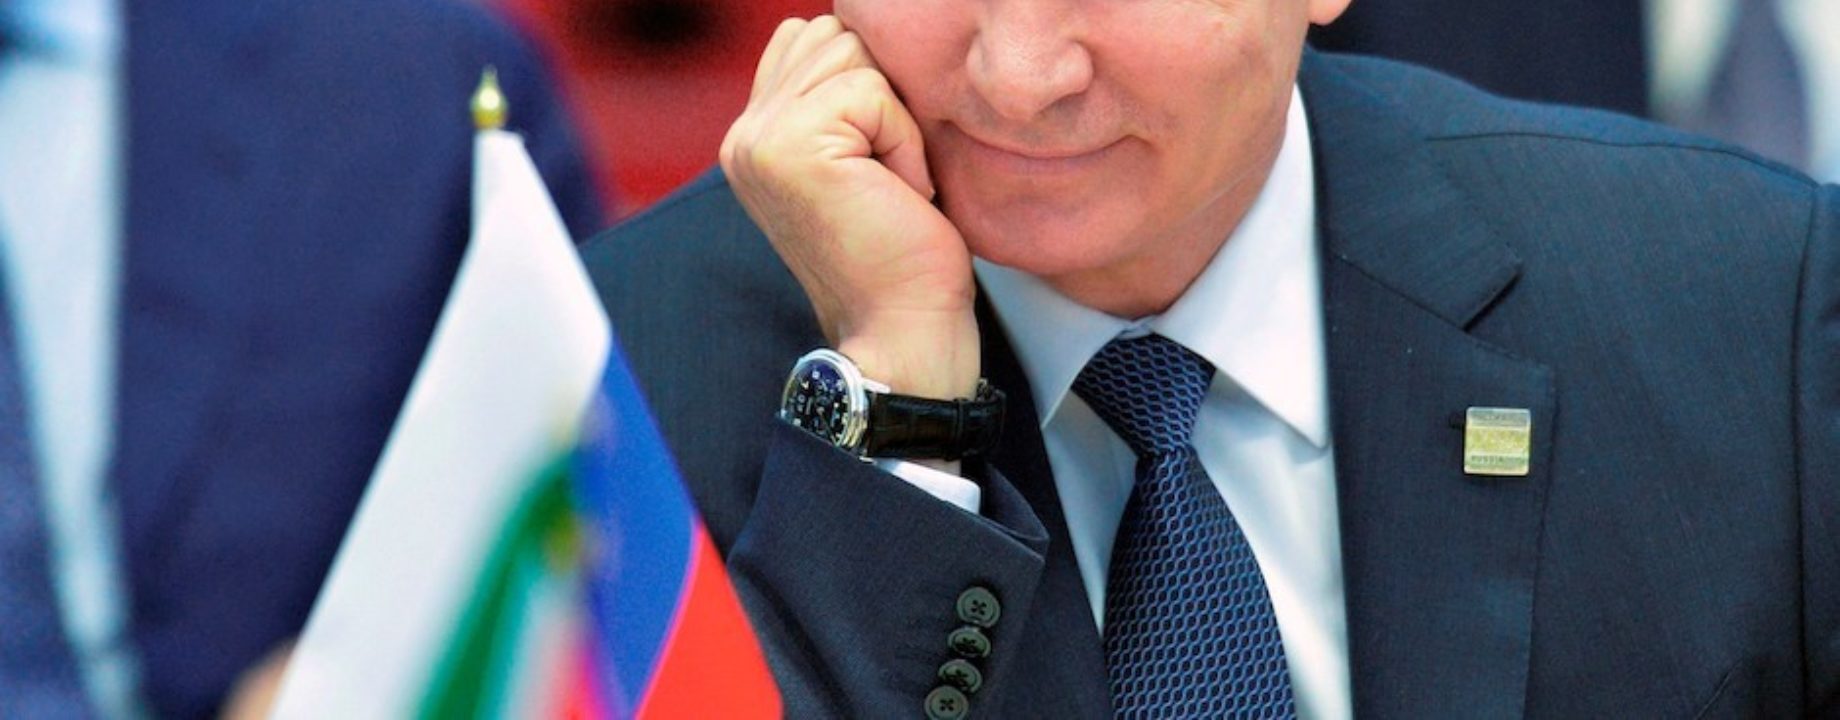 Putin smile trump 2